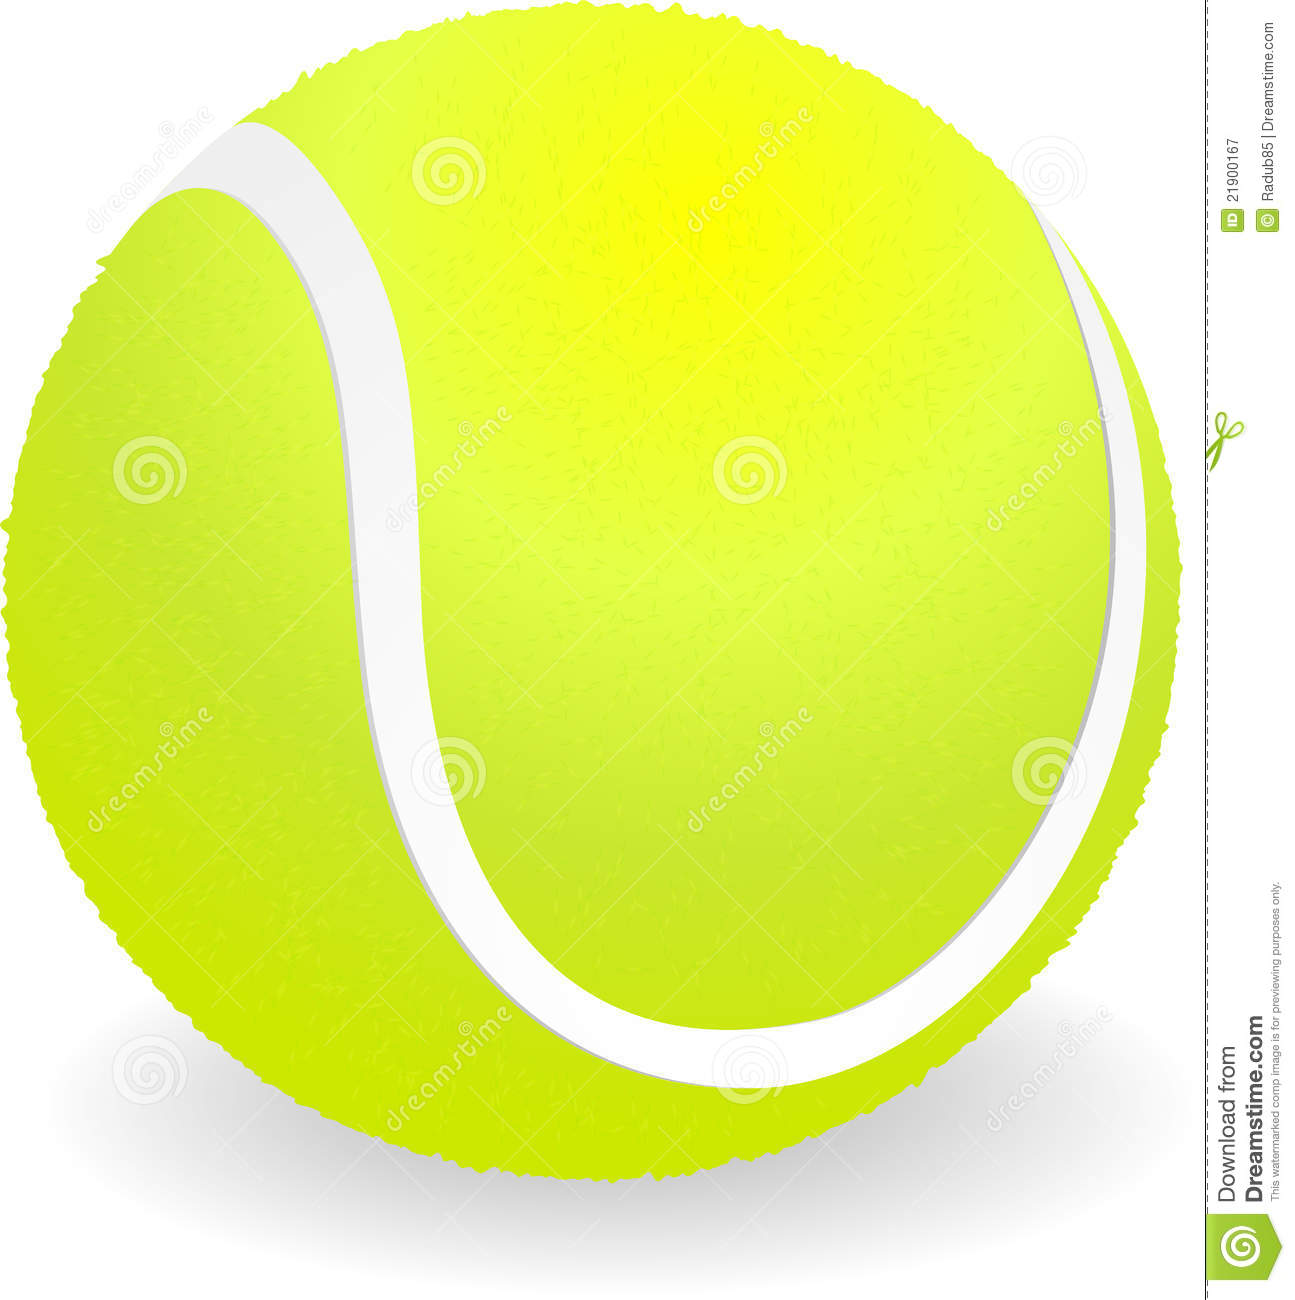 Tennis ball clipart black and